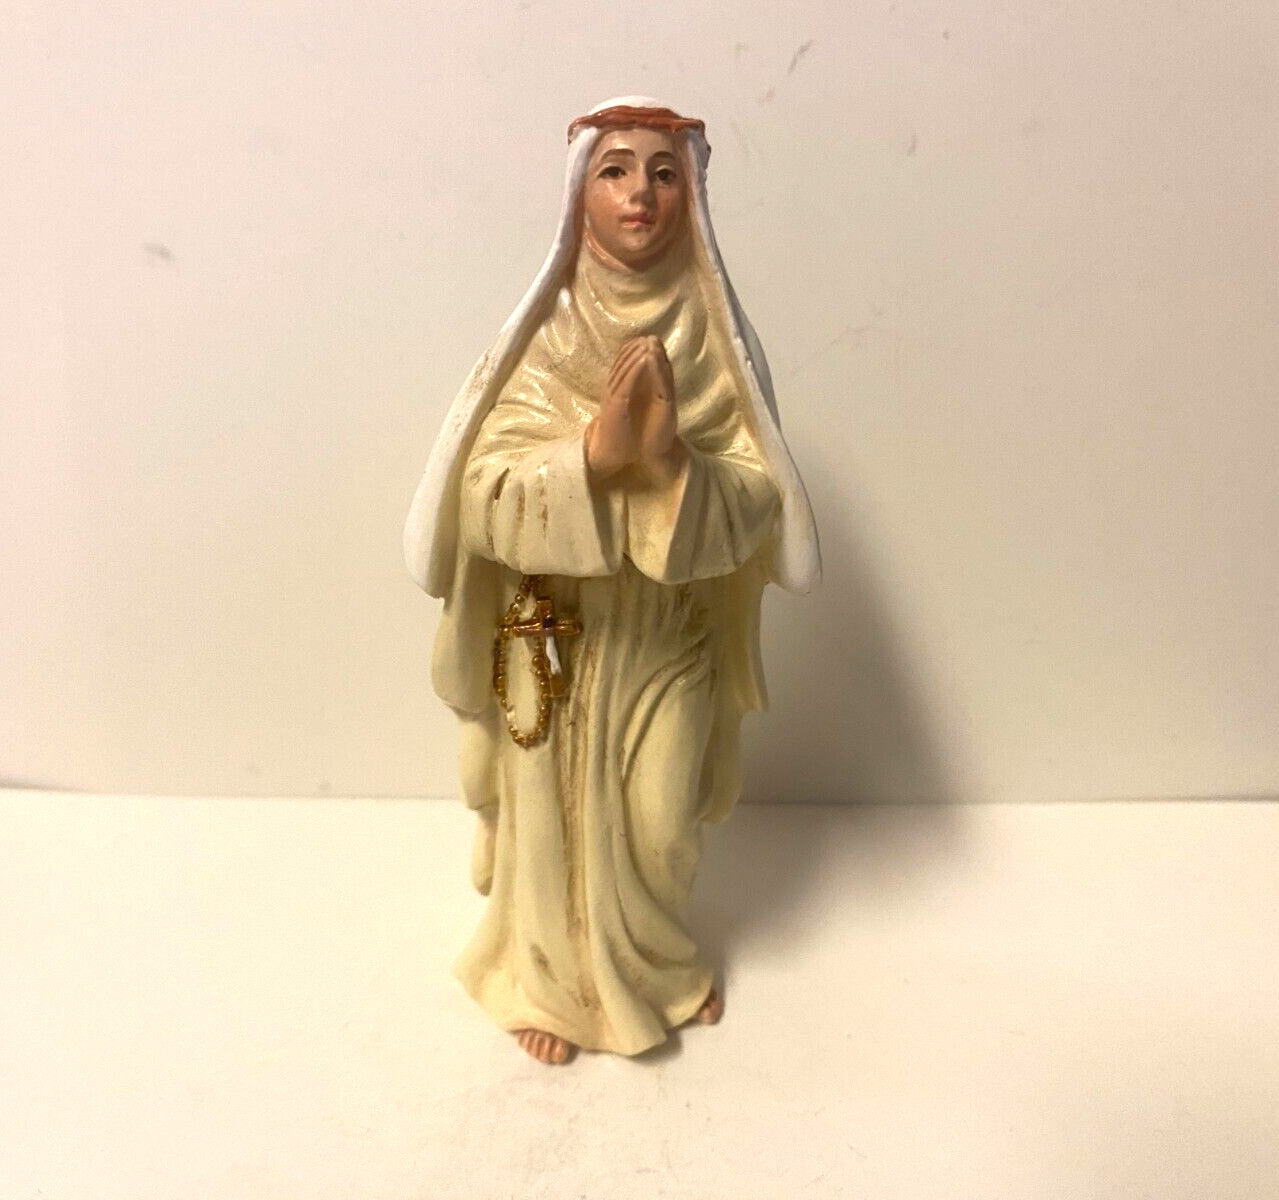 Saint Catherine of Siena Small 3.75"  Statue, Bio & Prayer Card, New #RM- - Bob and Penny Lord